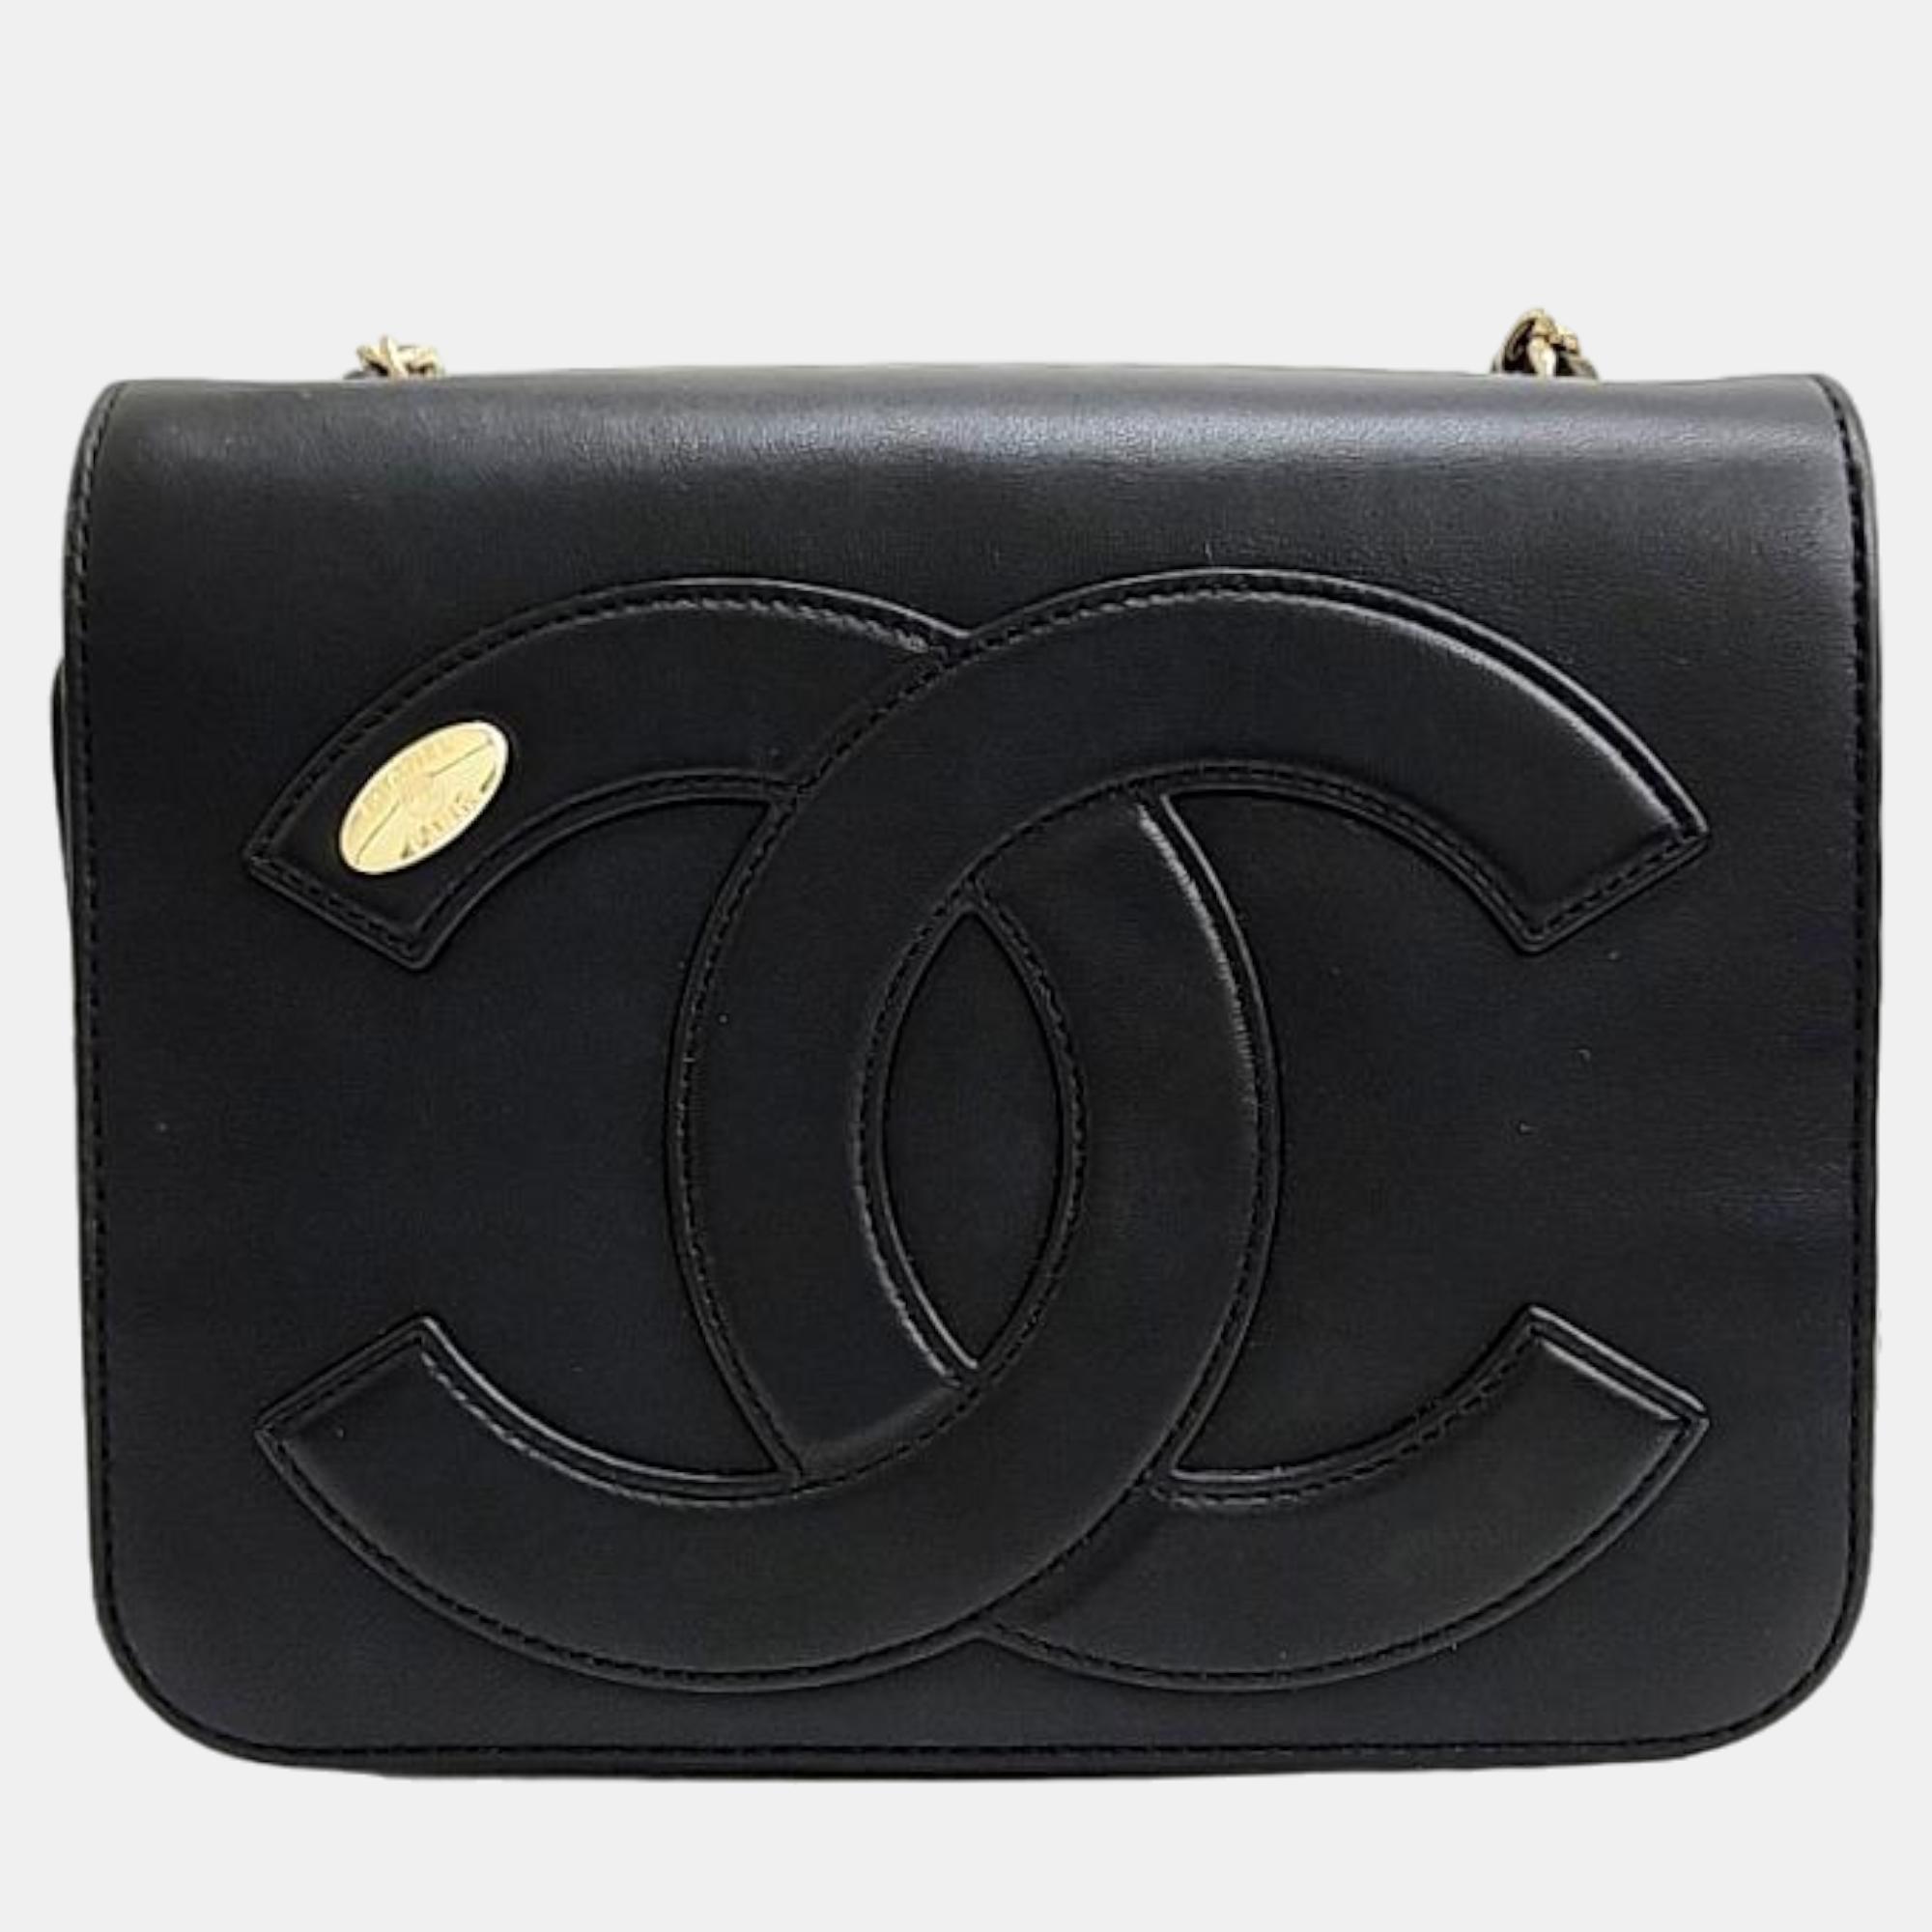 Chanel black leather cc mania flap shoulder bag